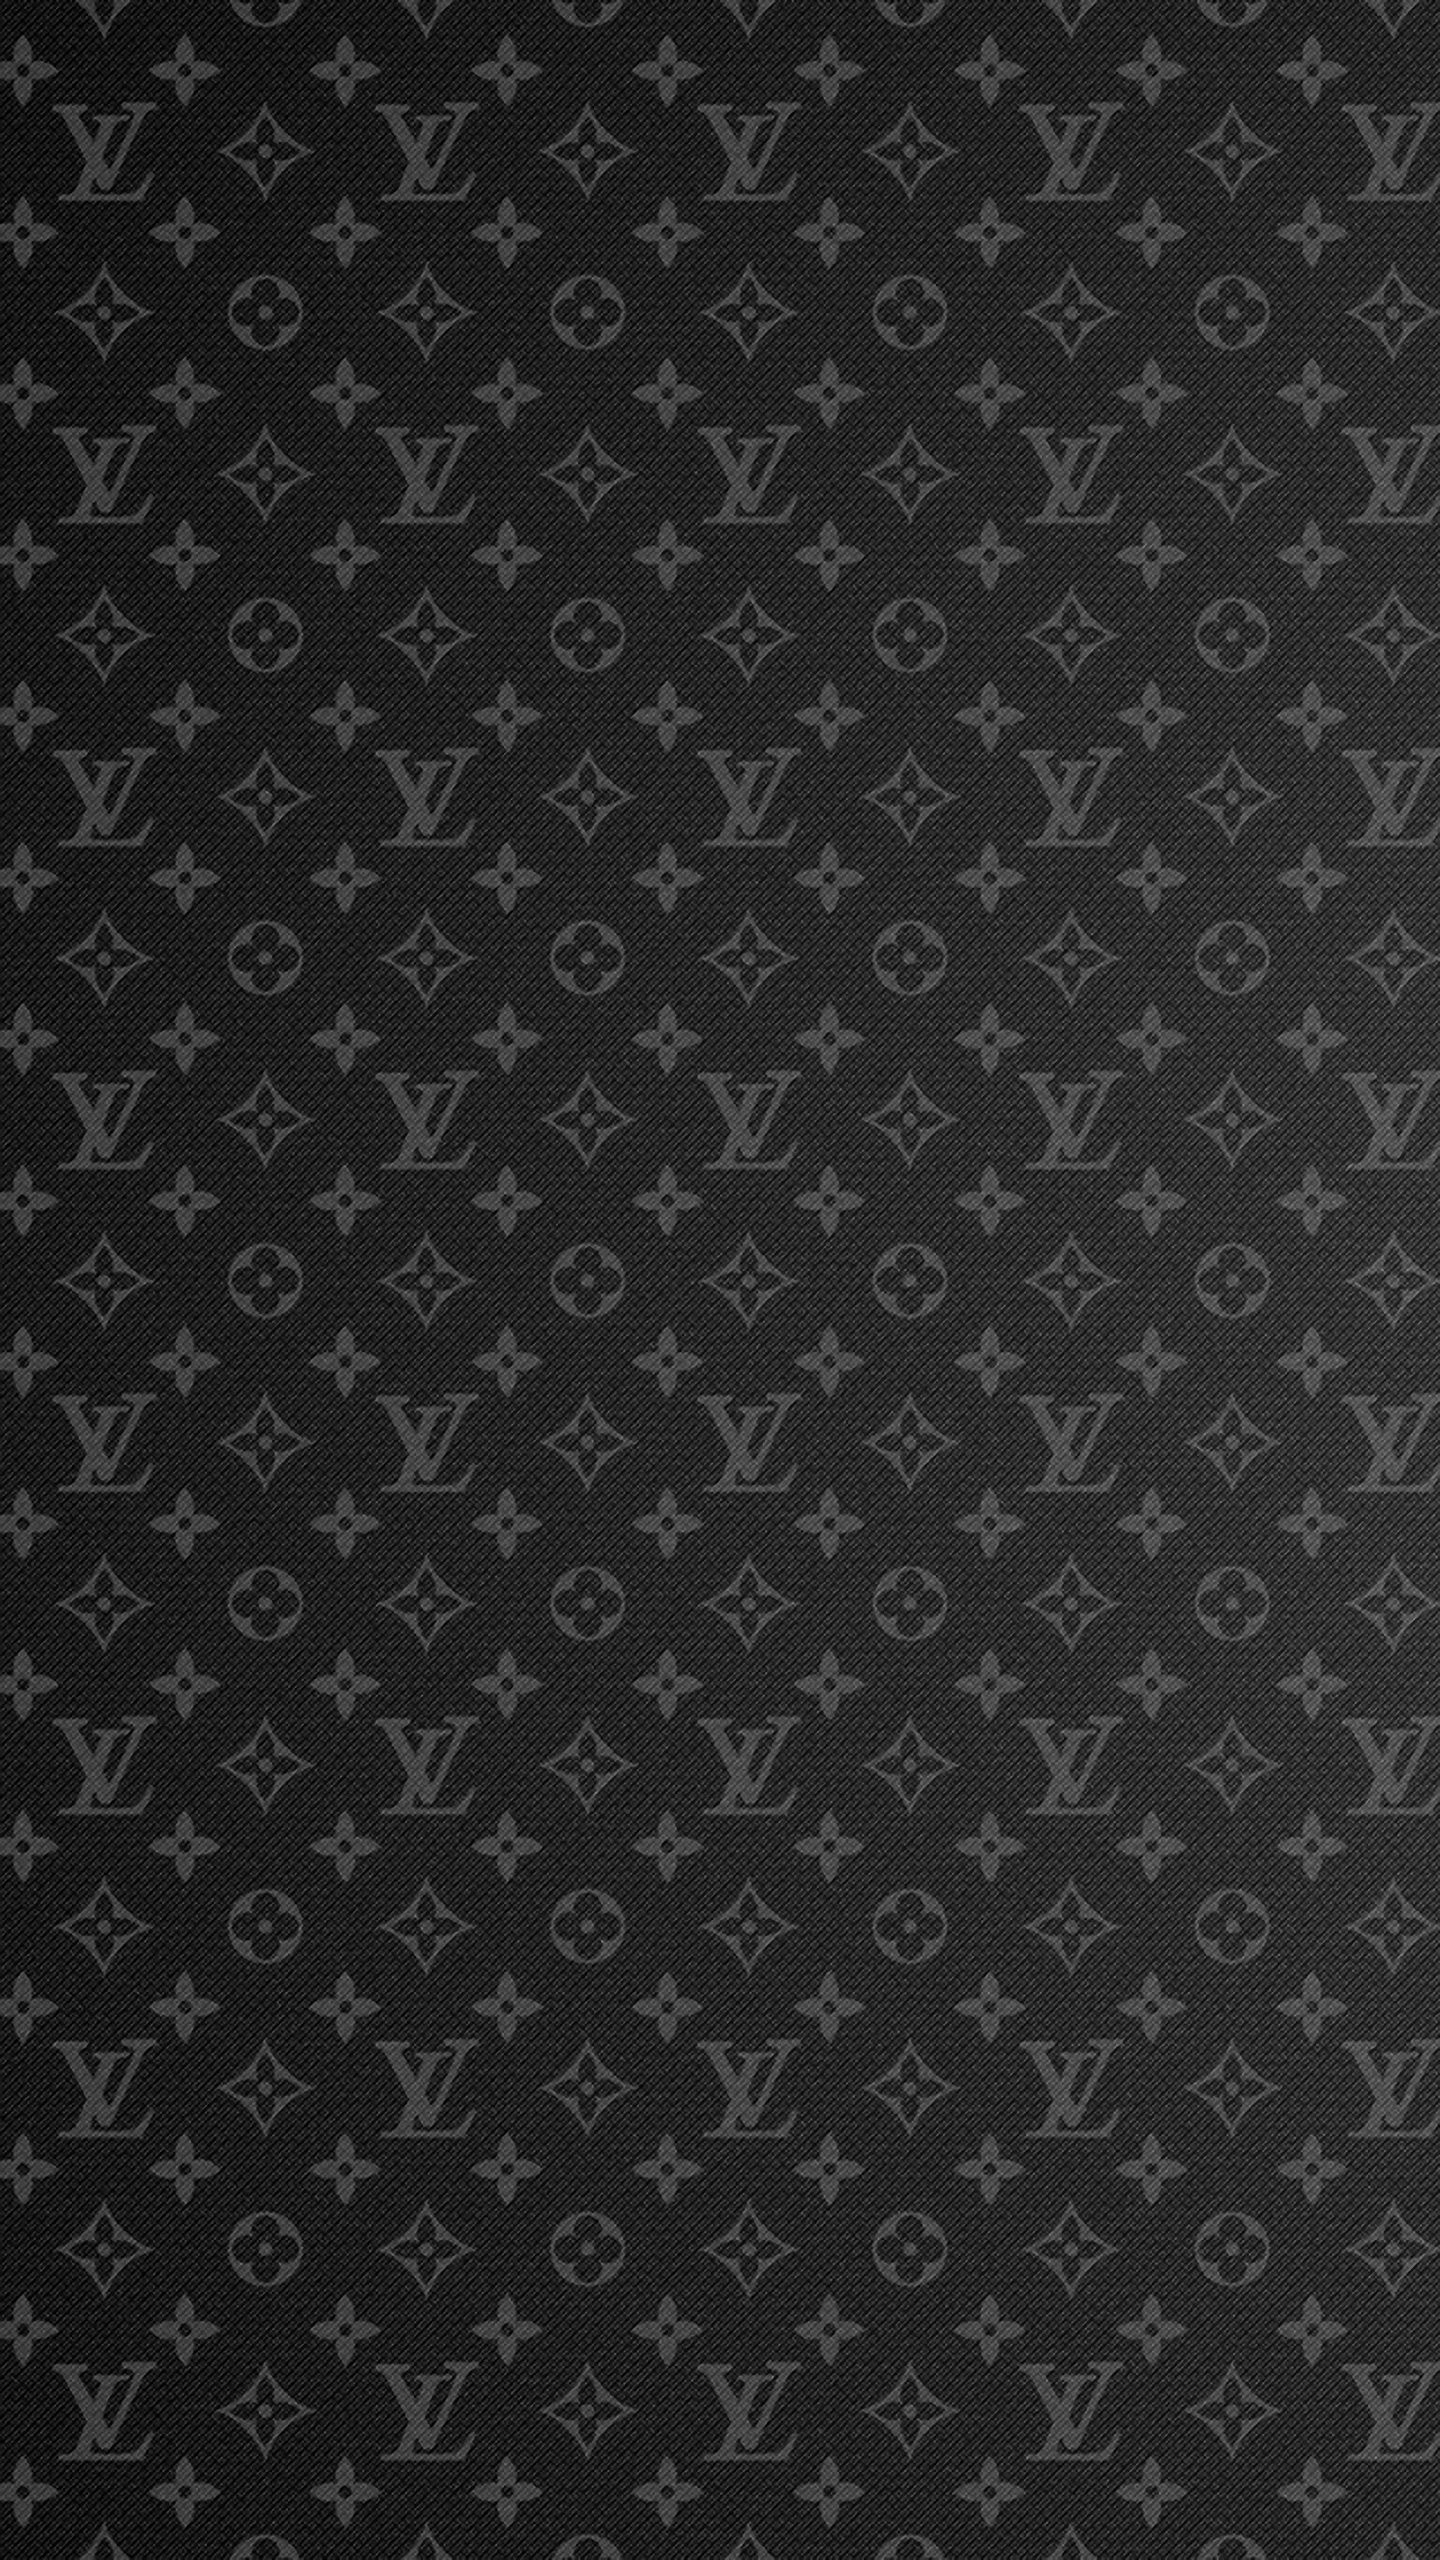 Louis Vuitton Wallpaper  Louis vuitton iphone wallpaper, Louis vuitton,  Vuitton